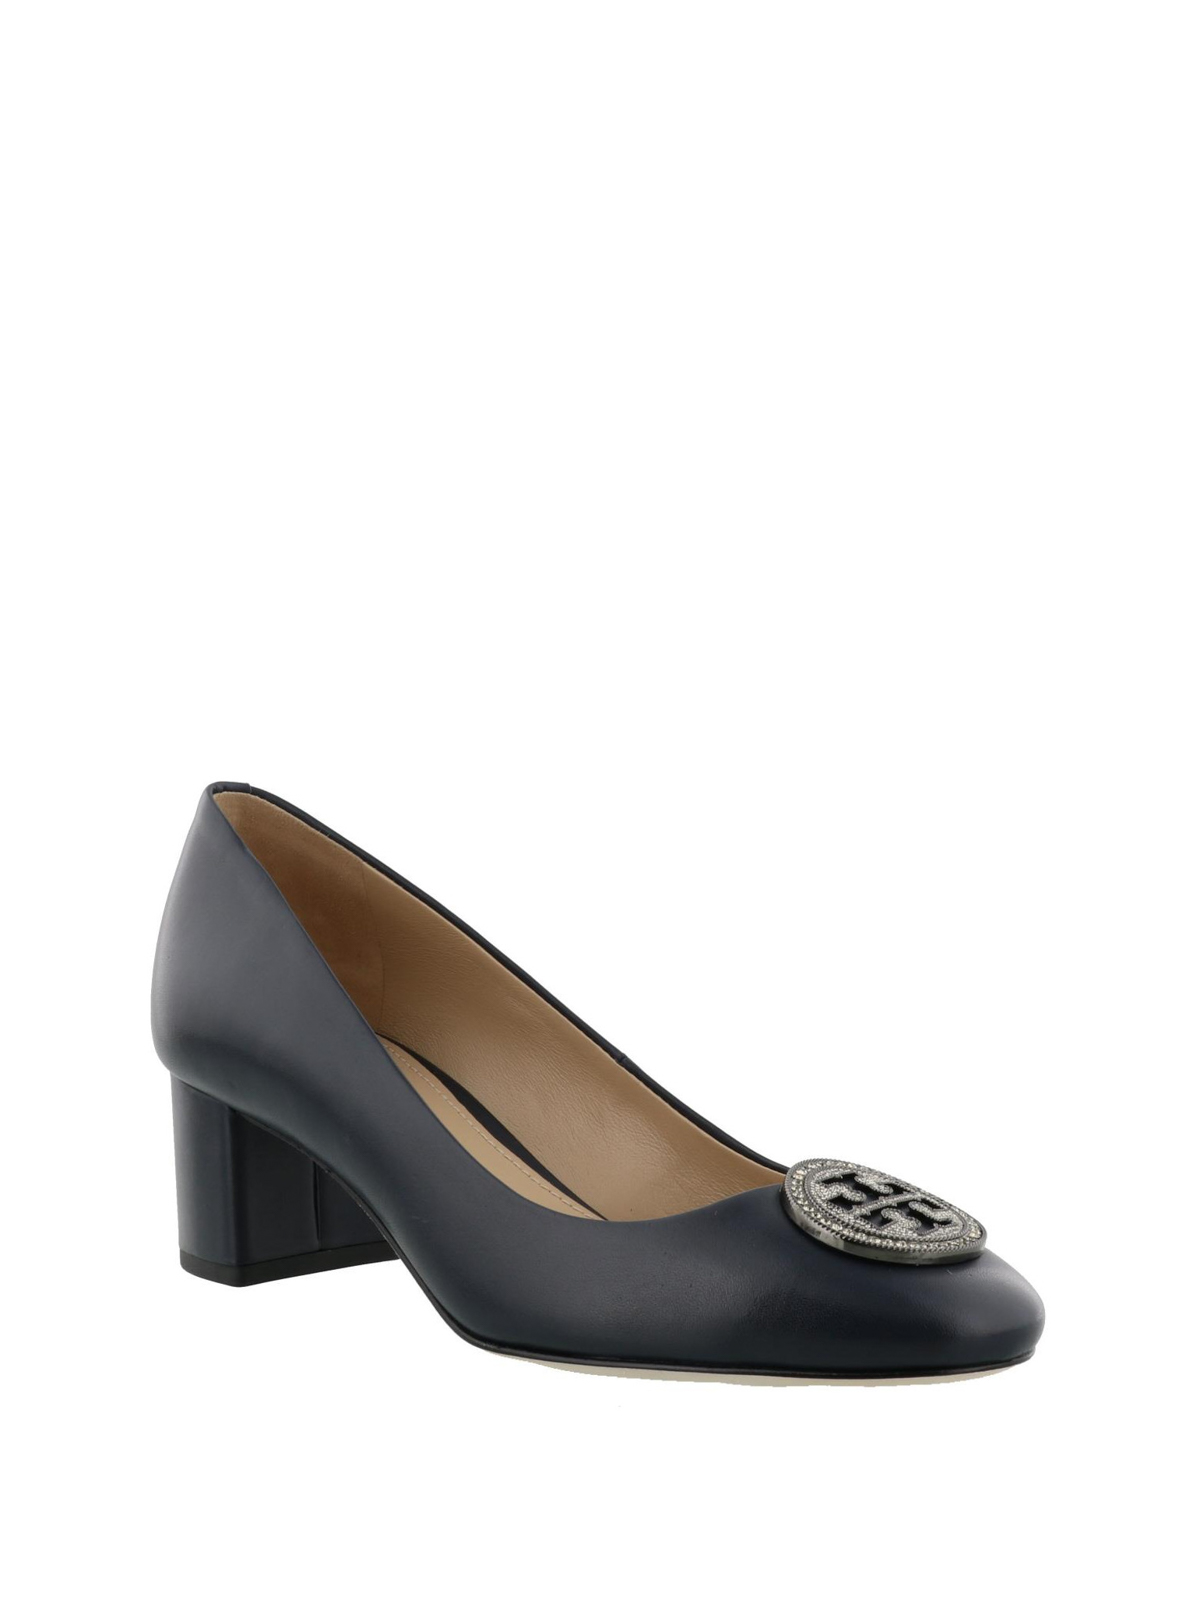 Court shoes Tory Burch - Liana blue leather pumps - 46258403 